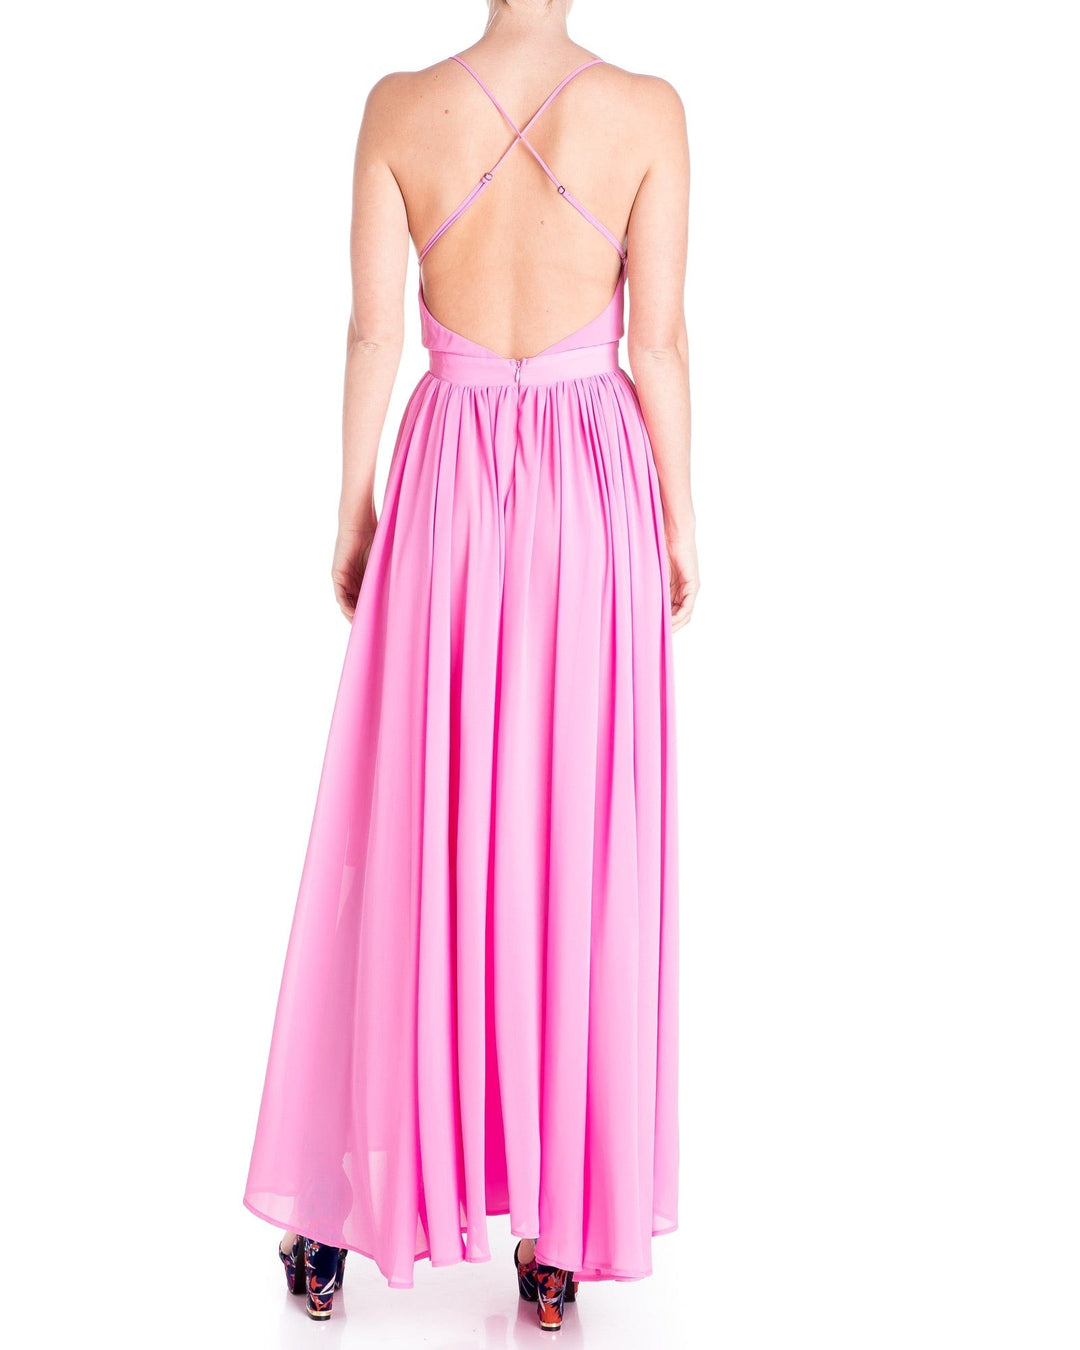 Enchanted Garden Maxi Dress - Bubblegum Pink by Meghan Fabulous